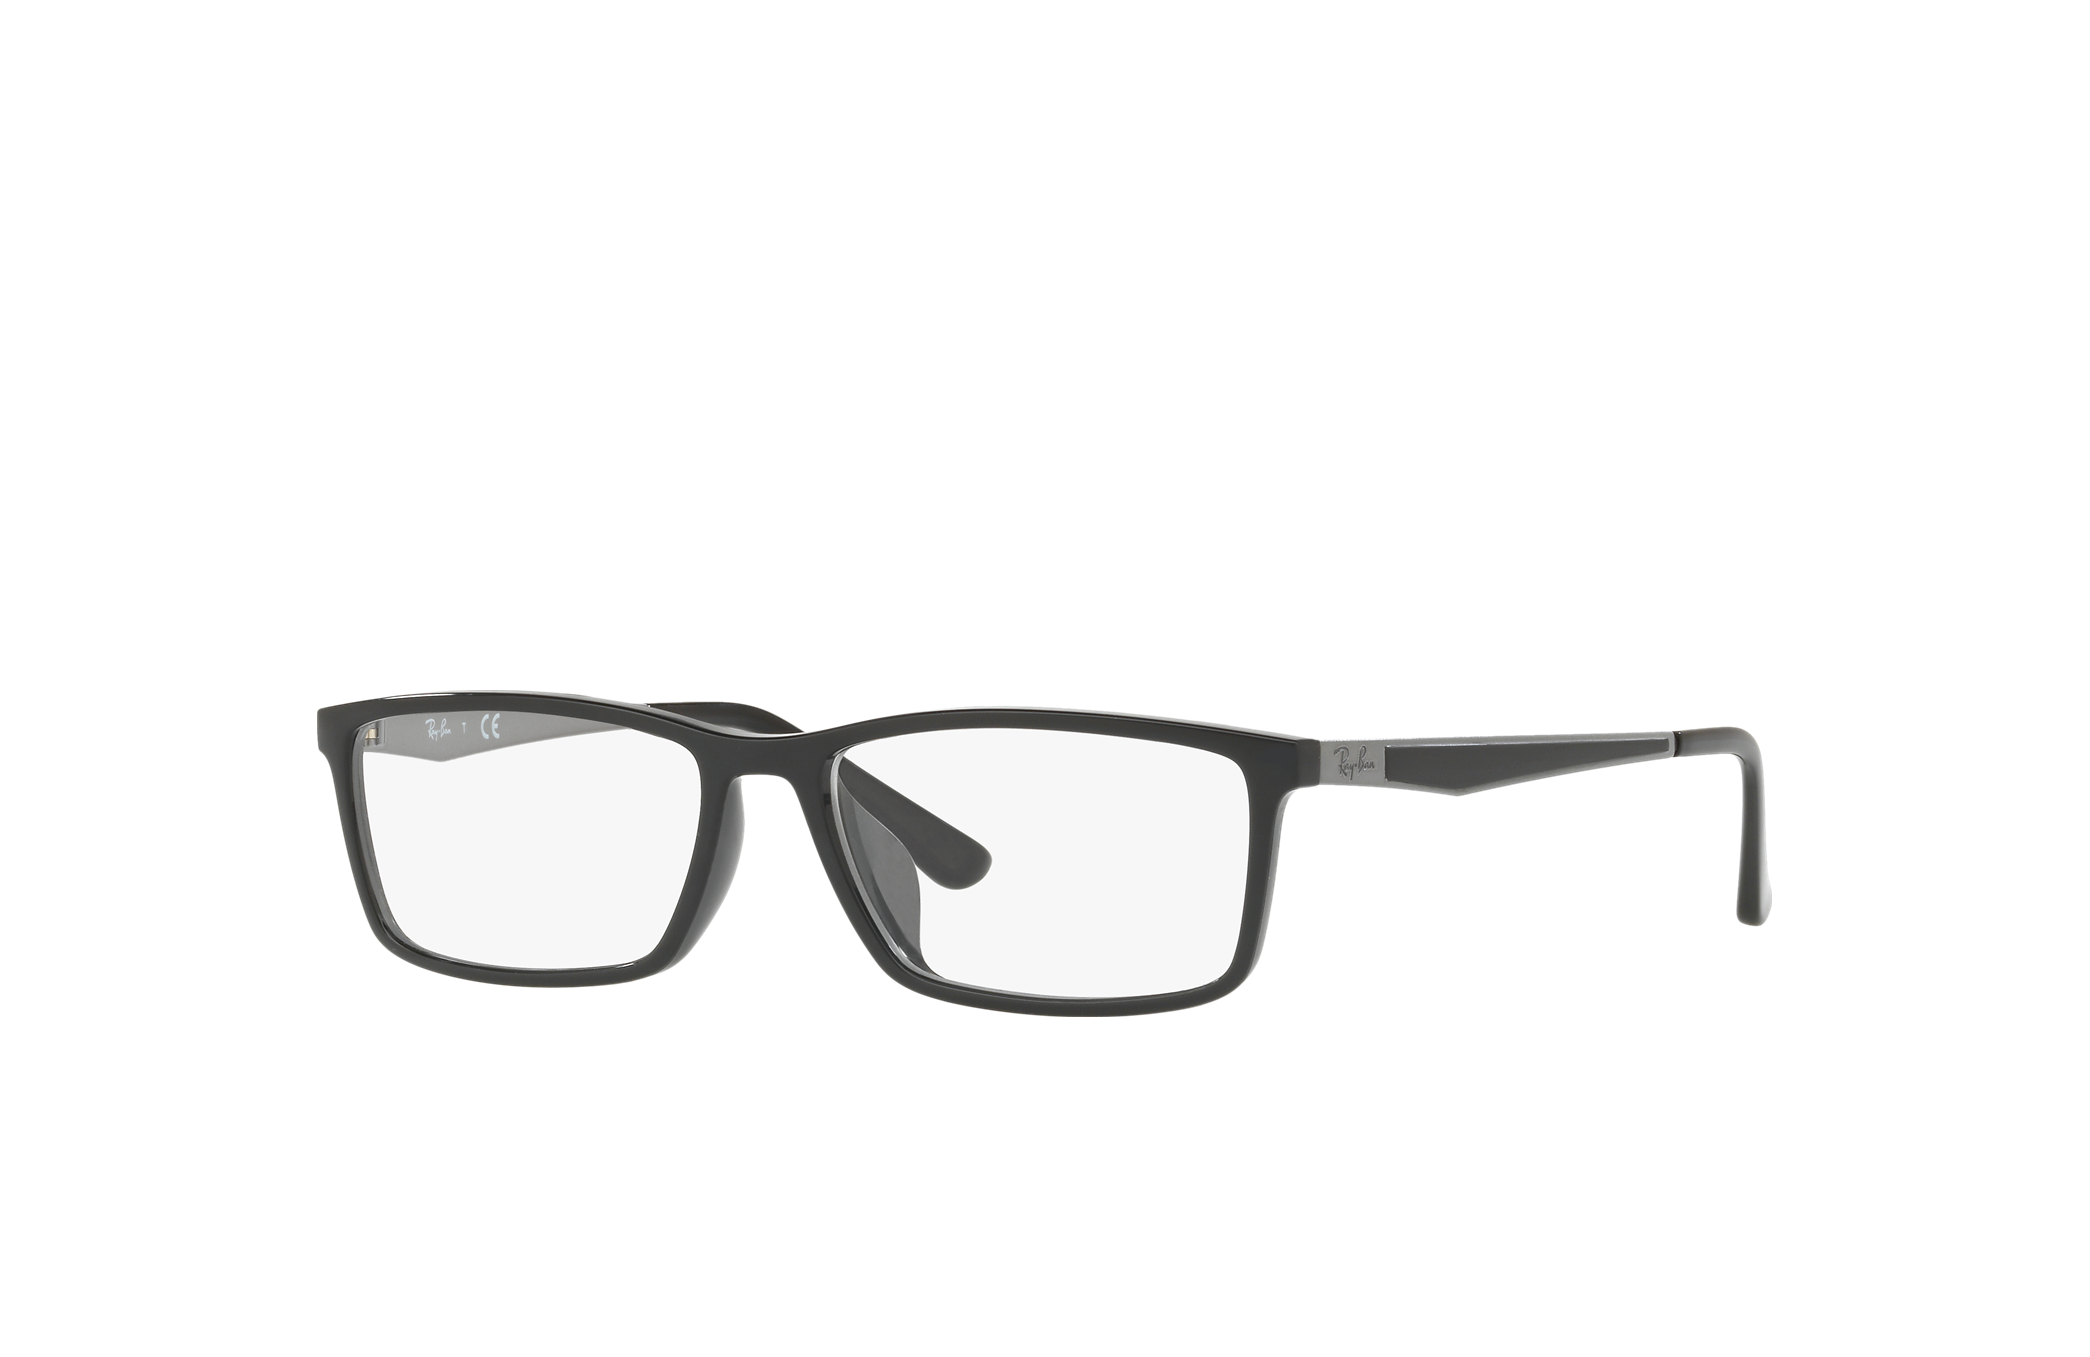 Rb7114d Eyeglasses with Black Frame - RB7114D | Ray-Ban®